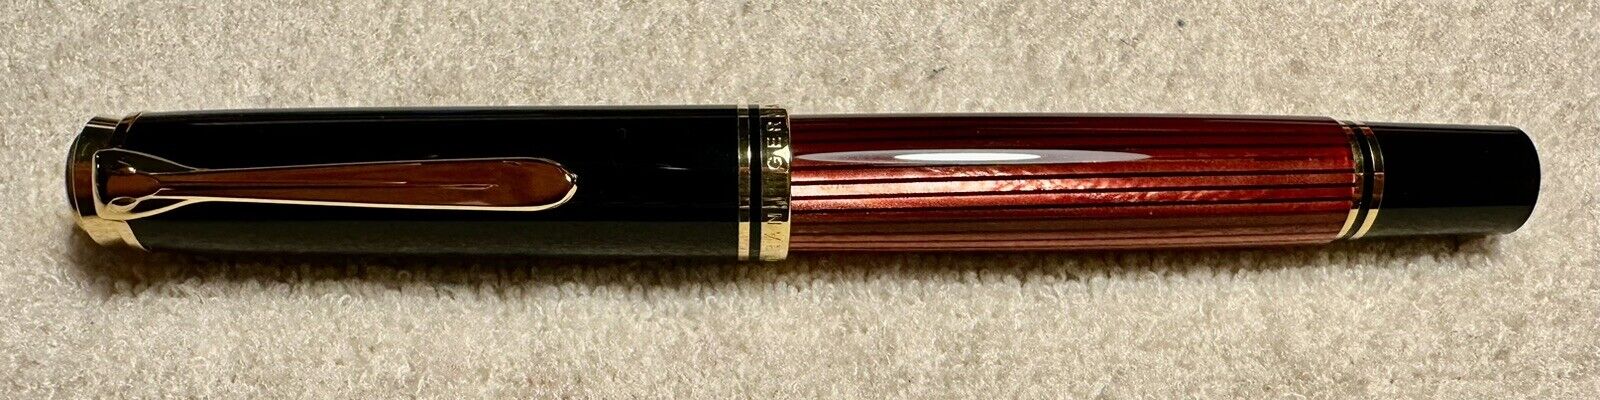 Pelikan Souverän M800 Fountain Pen - Black-Red 18k OM Nib